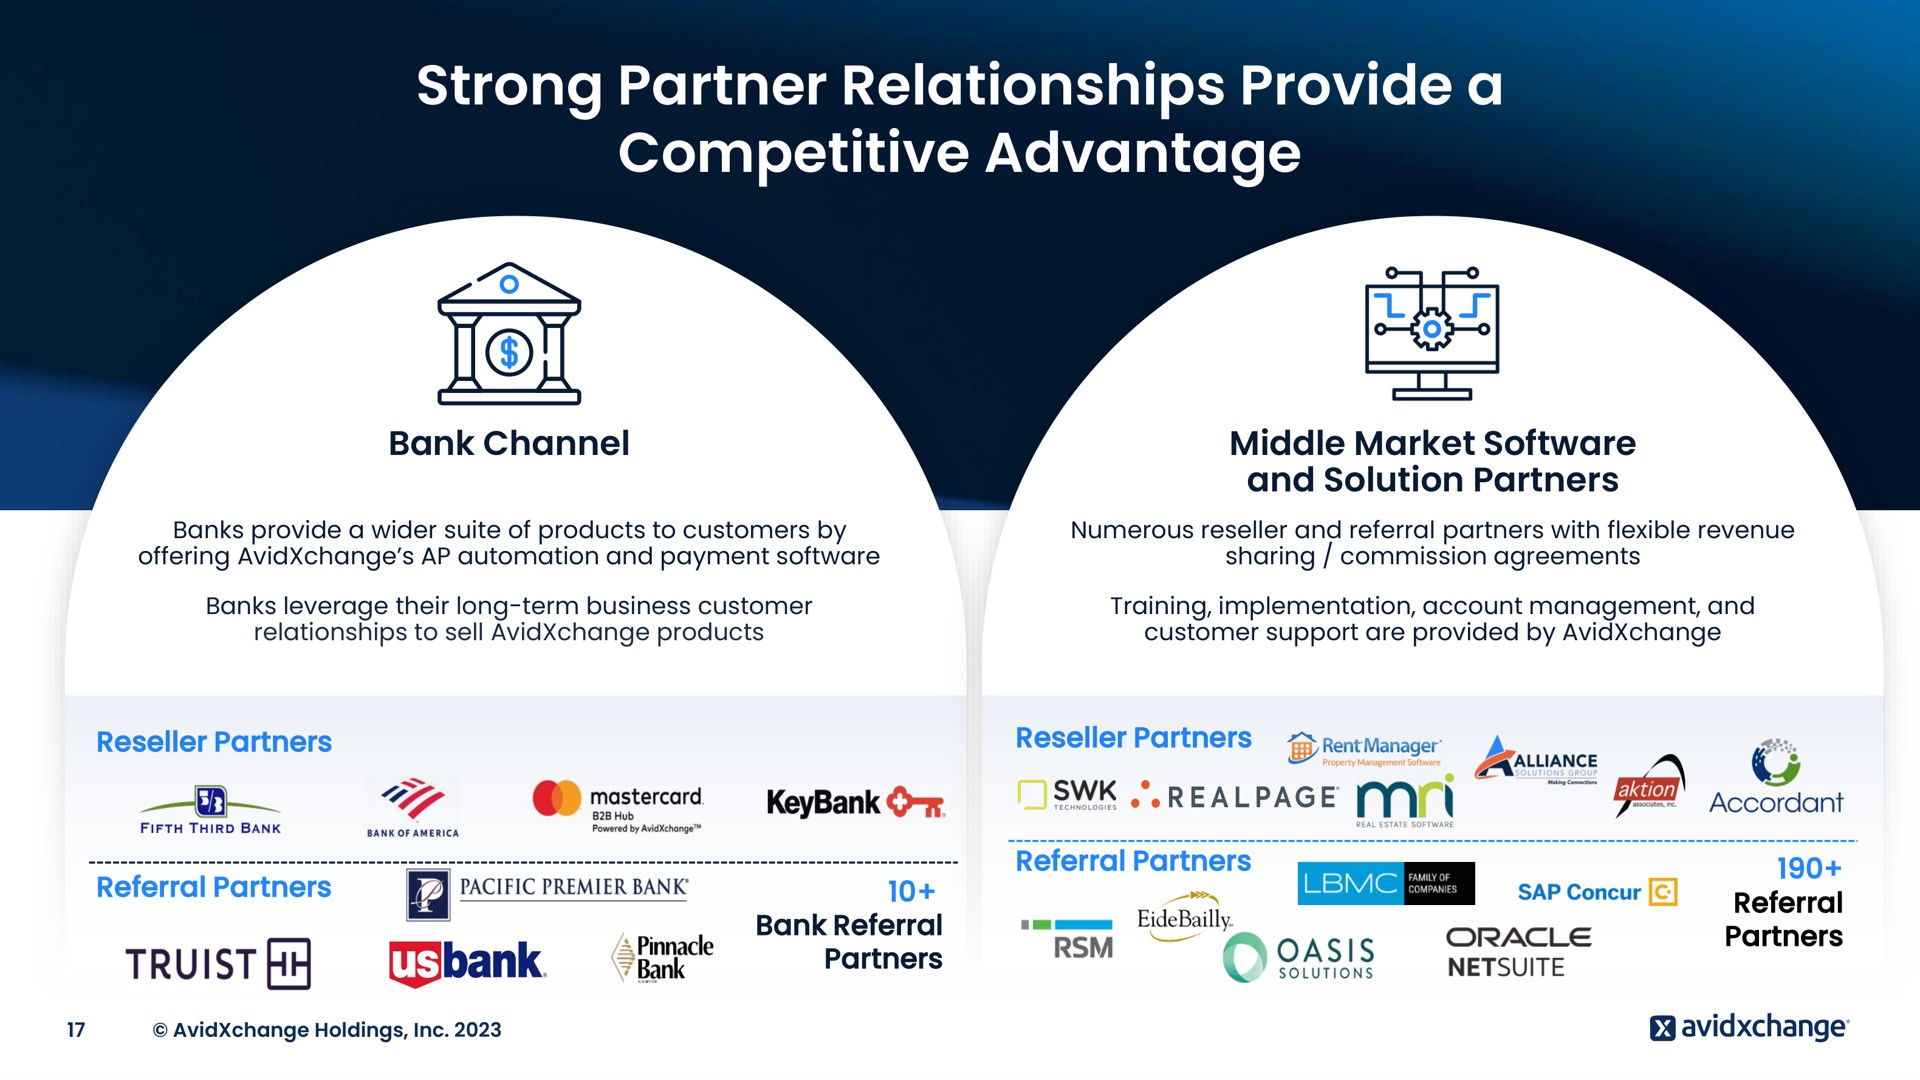 strong partner relationships provide a competitive advantage | AvidXchange